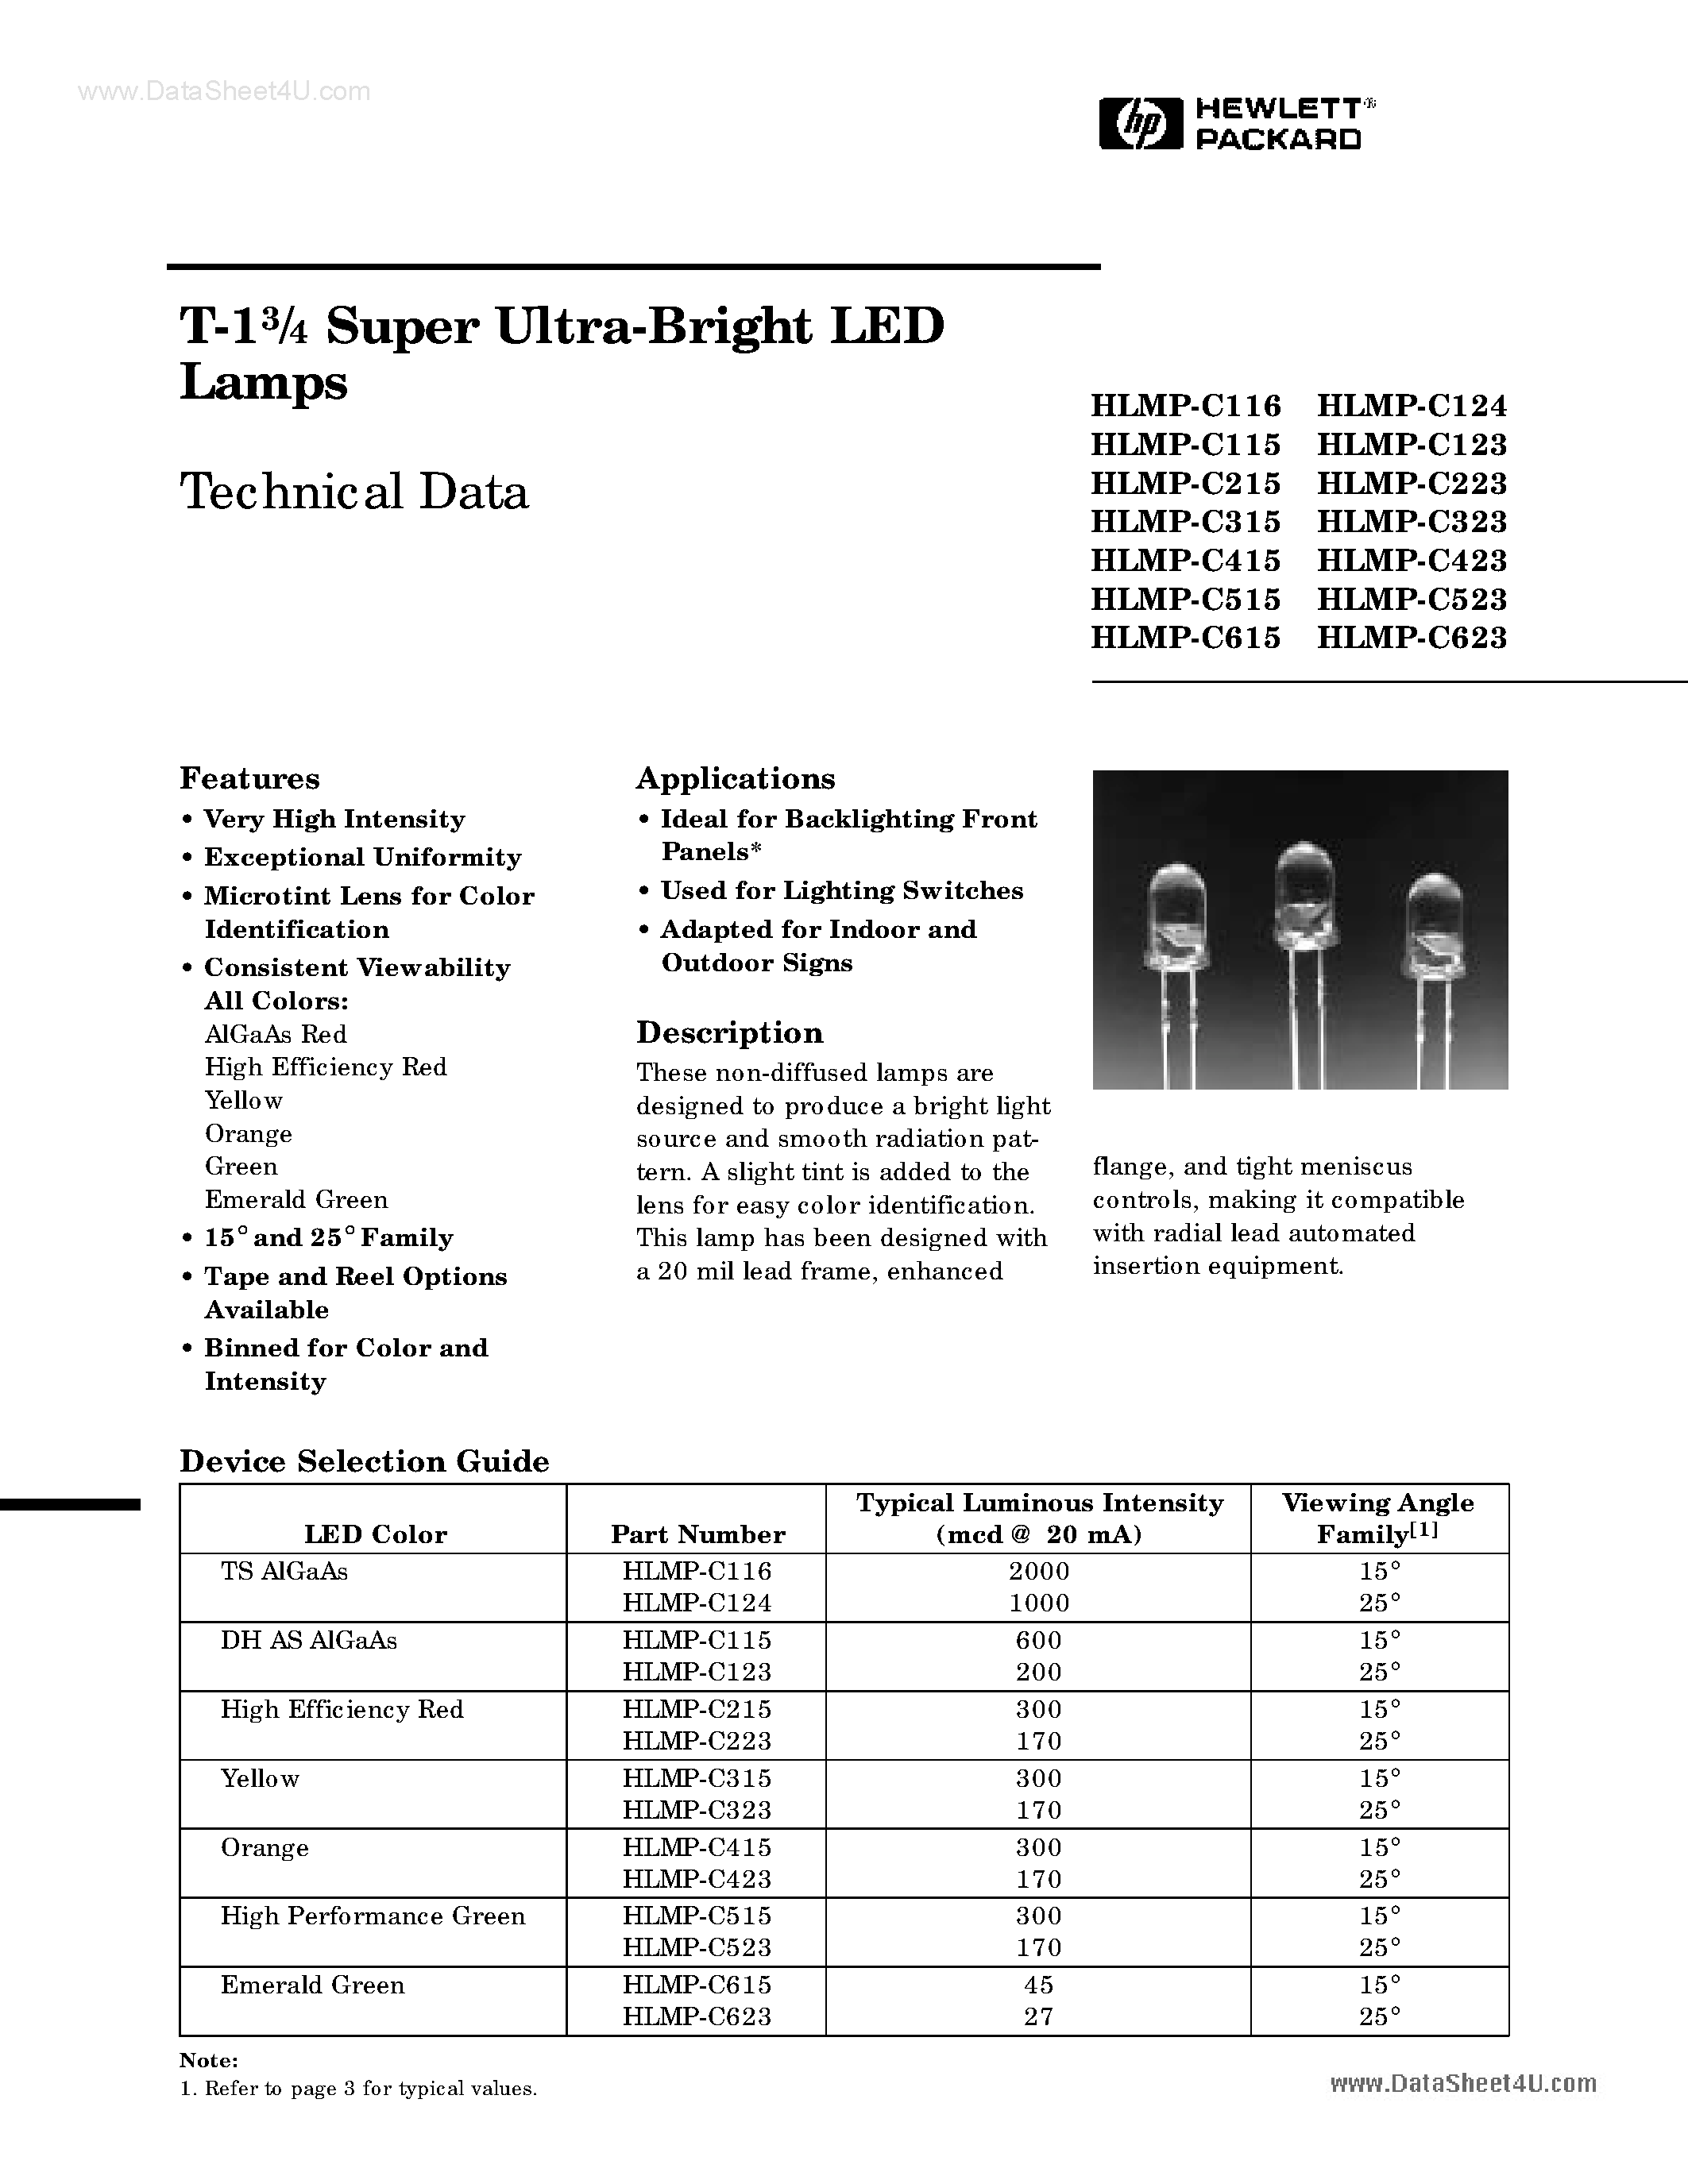 Datasheet HLMP-C115 - (HLMP-Cxxx) T-13/4 Super Ultra-Bright LED Lamps page 1